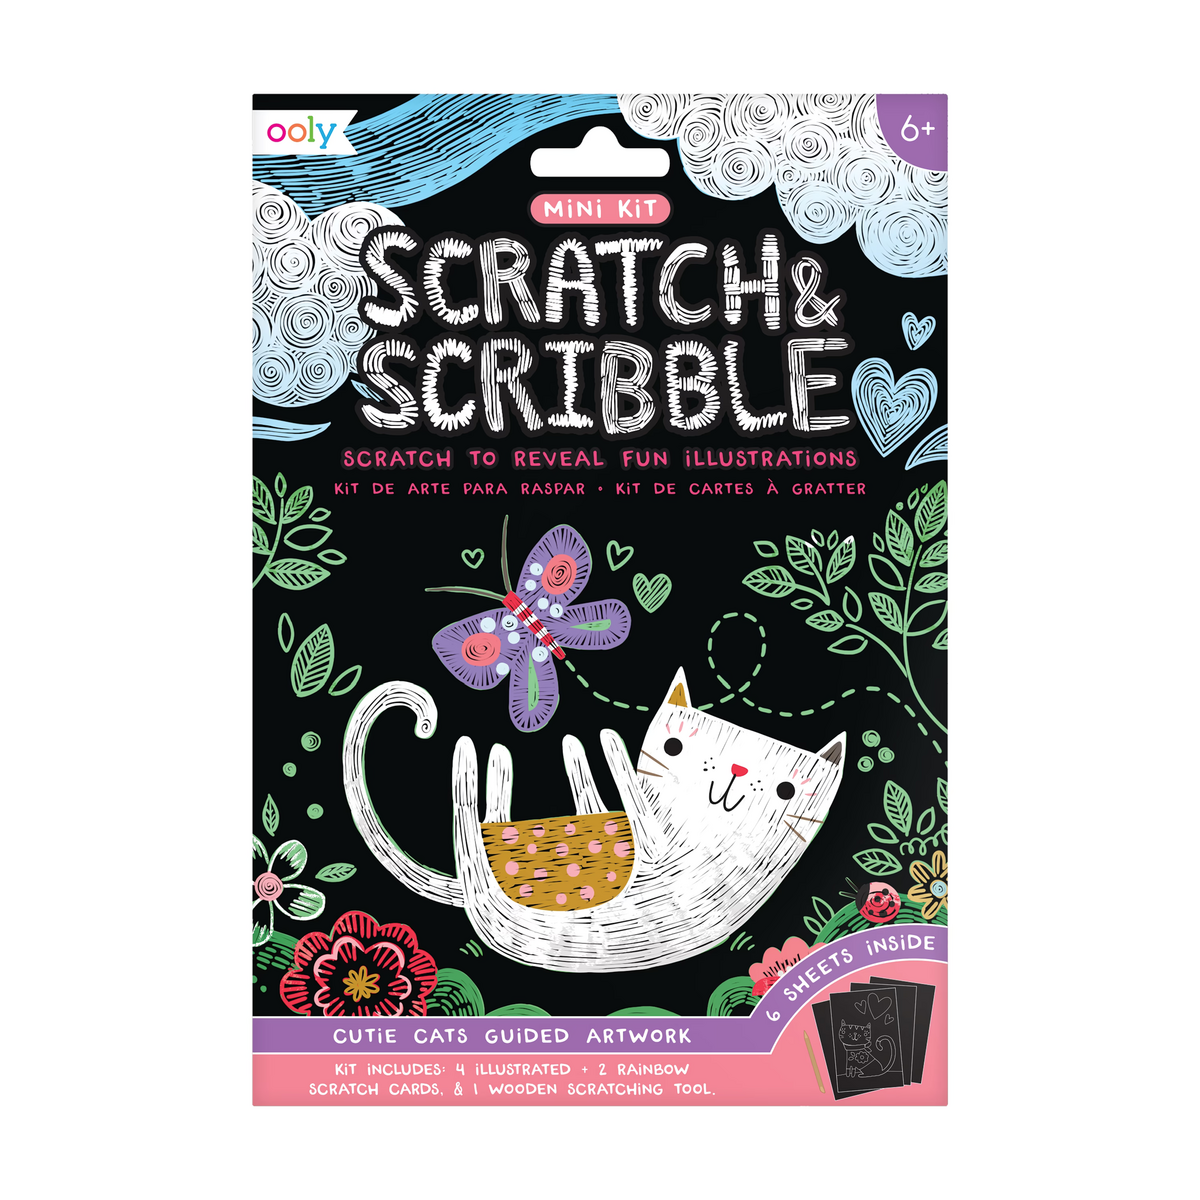 Space Explorer Scratch and Scribble Scratch Art Kit